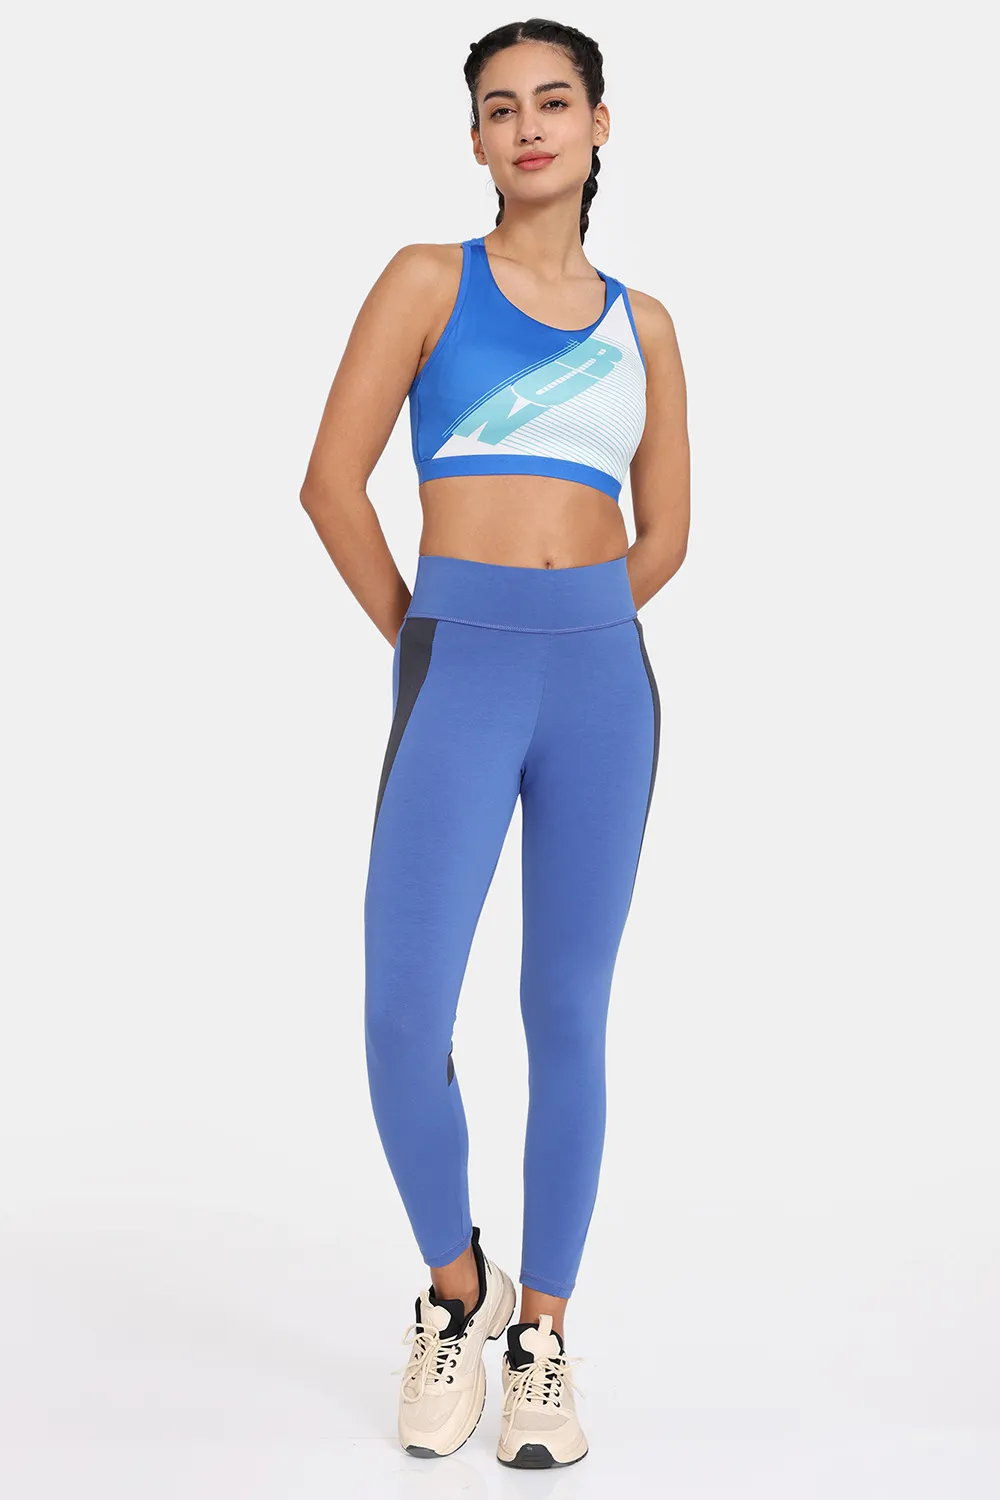 https://cdn.zivame.com/ik-seo/media/catalog/product/1/_/1_69_28/zelocity-quick-dry-removable-padding-sports-bra-with-high-rise-leggings-blue-cobalt.jpg